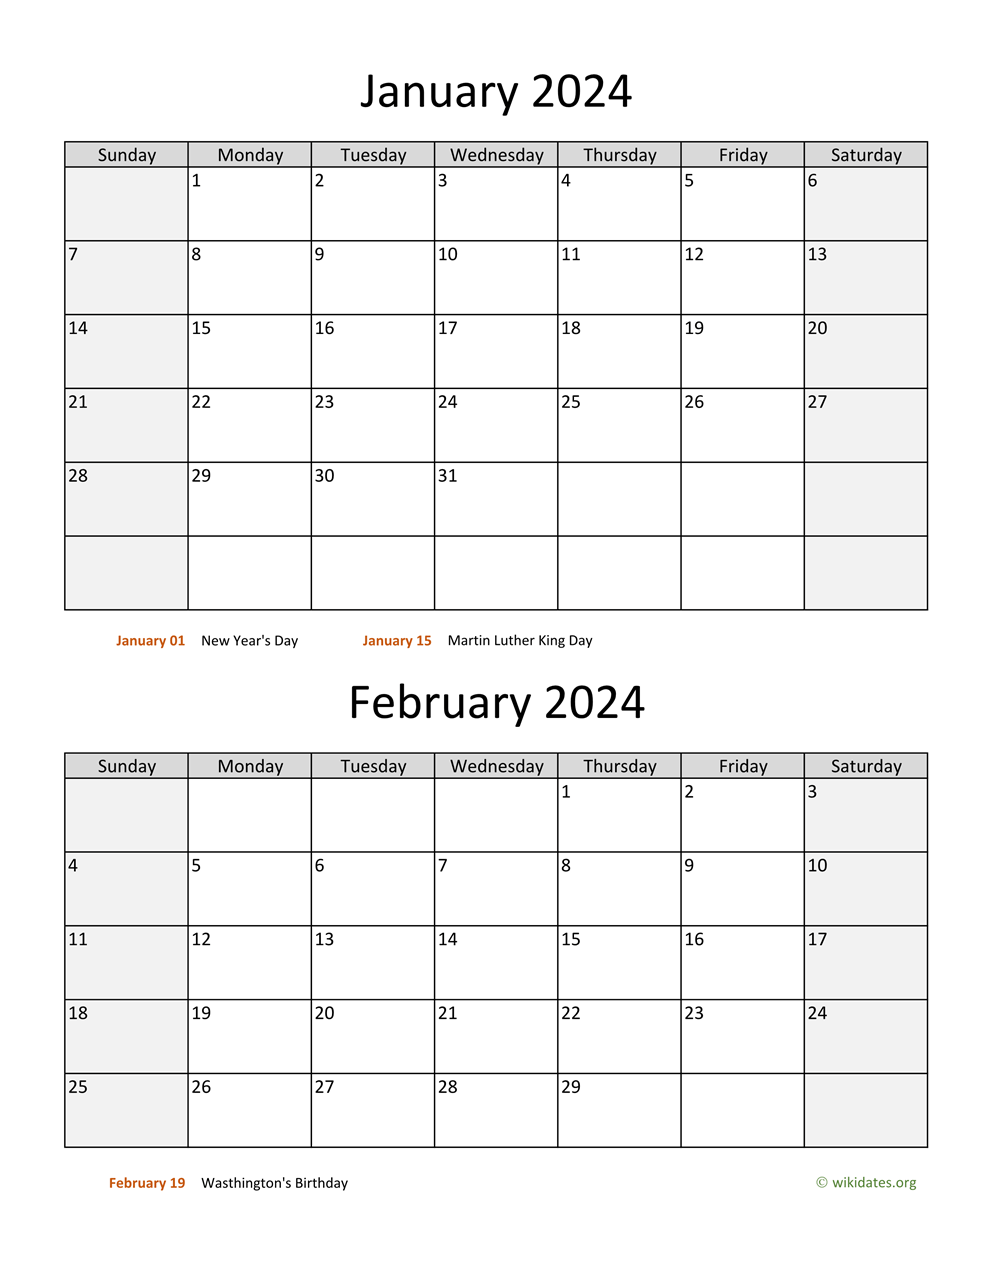 January and February 2024 Calendar | WikiDates.org